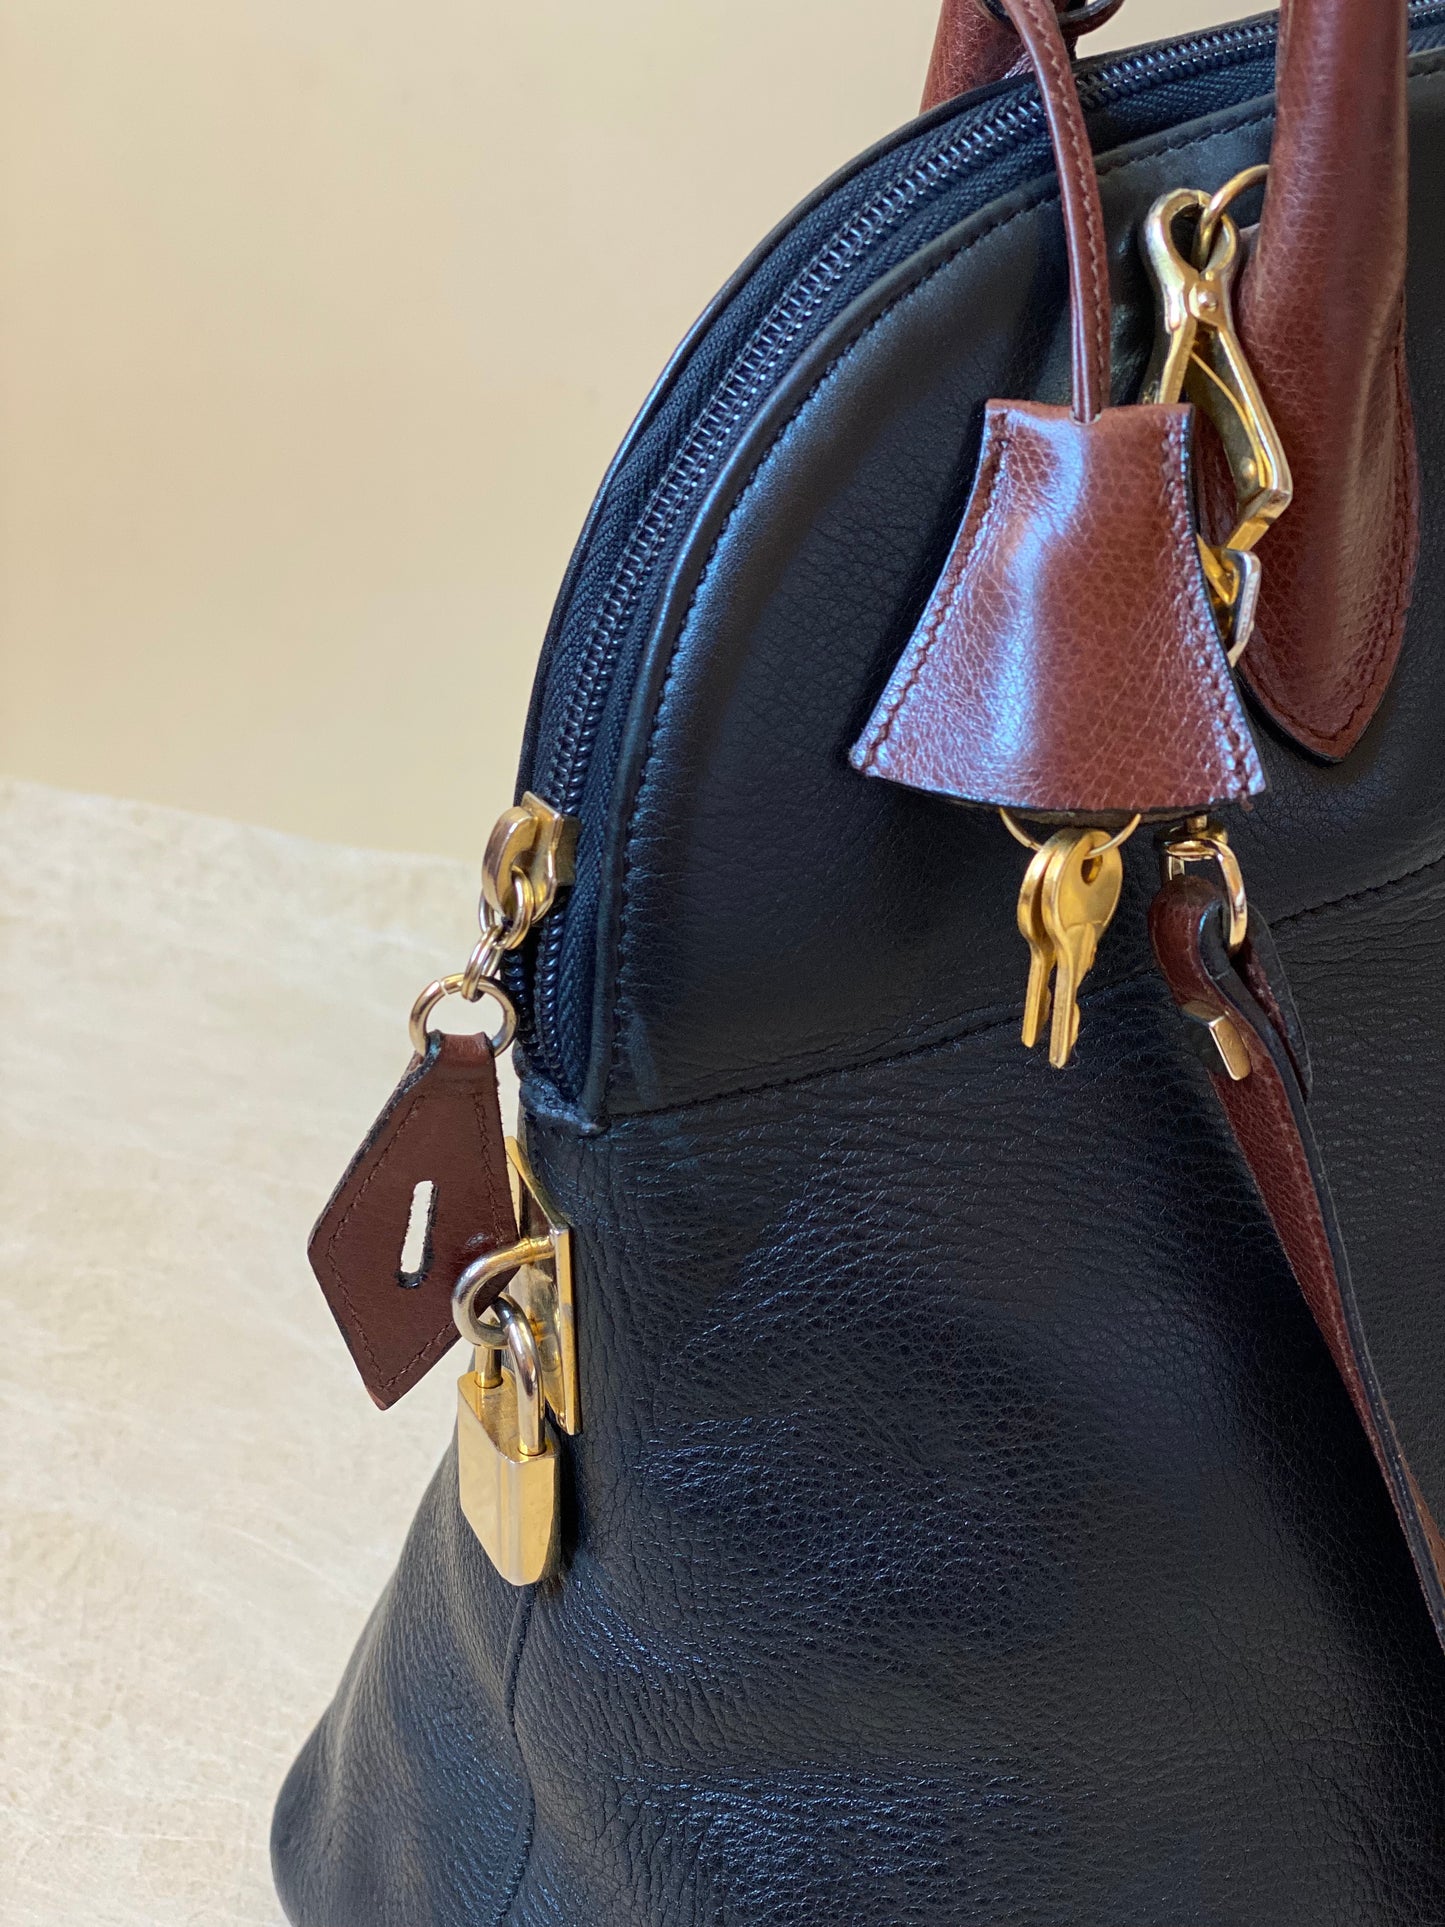 Vintage Black & Brown Leather Handbag by Serapian